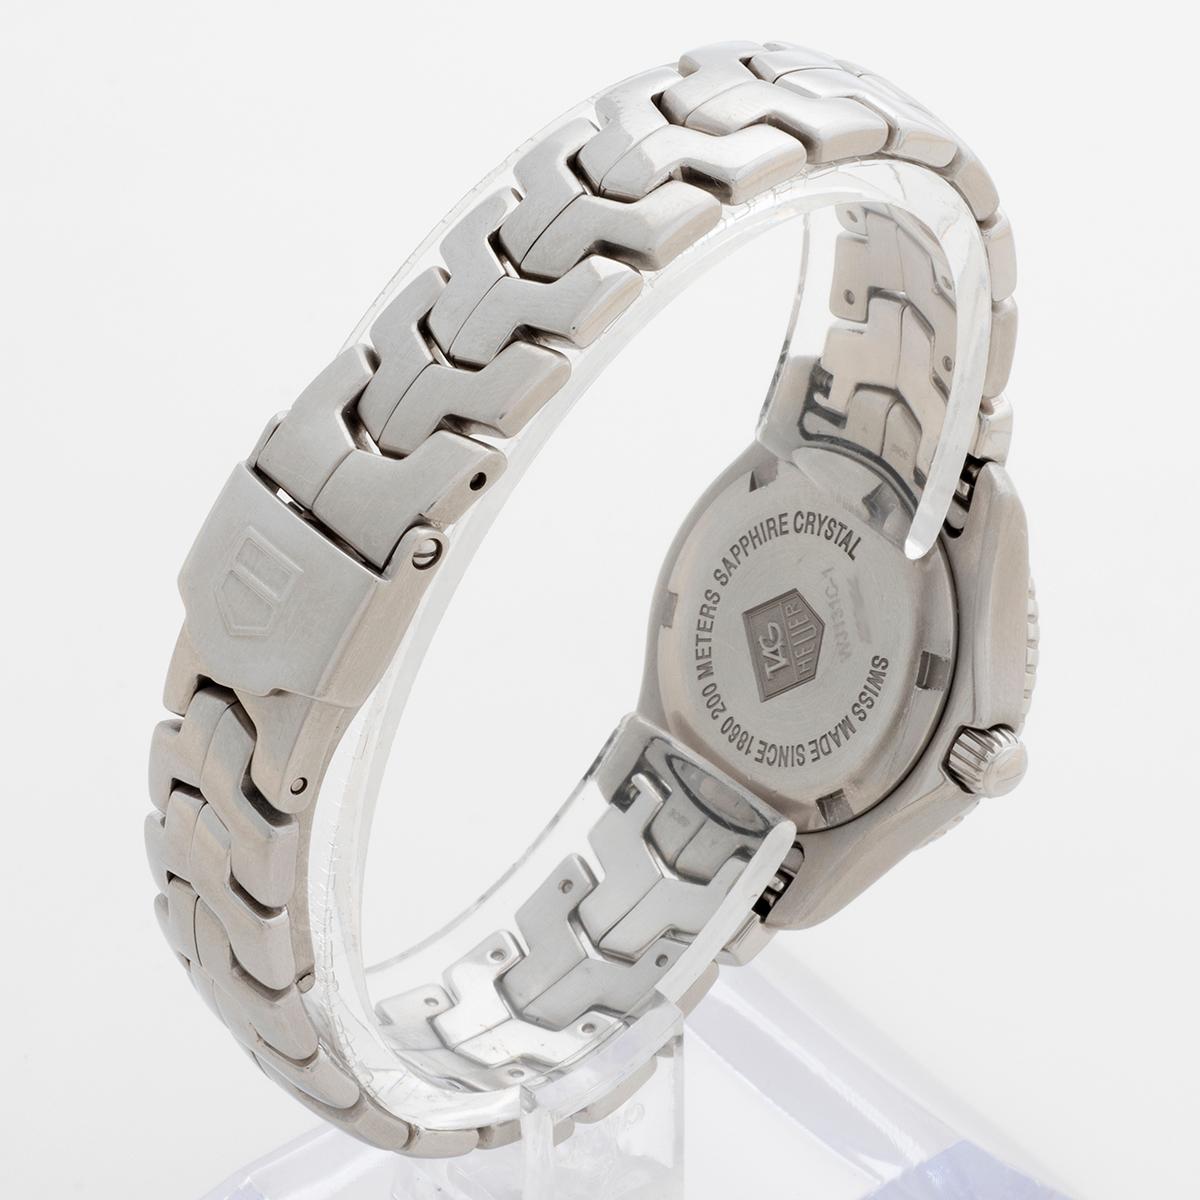 Women's or Men's Tag Heuer Link Ladies Wristwatch.Ref WJ131-C1. Mother of Pearl Dial/Diamonds.